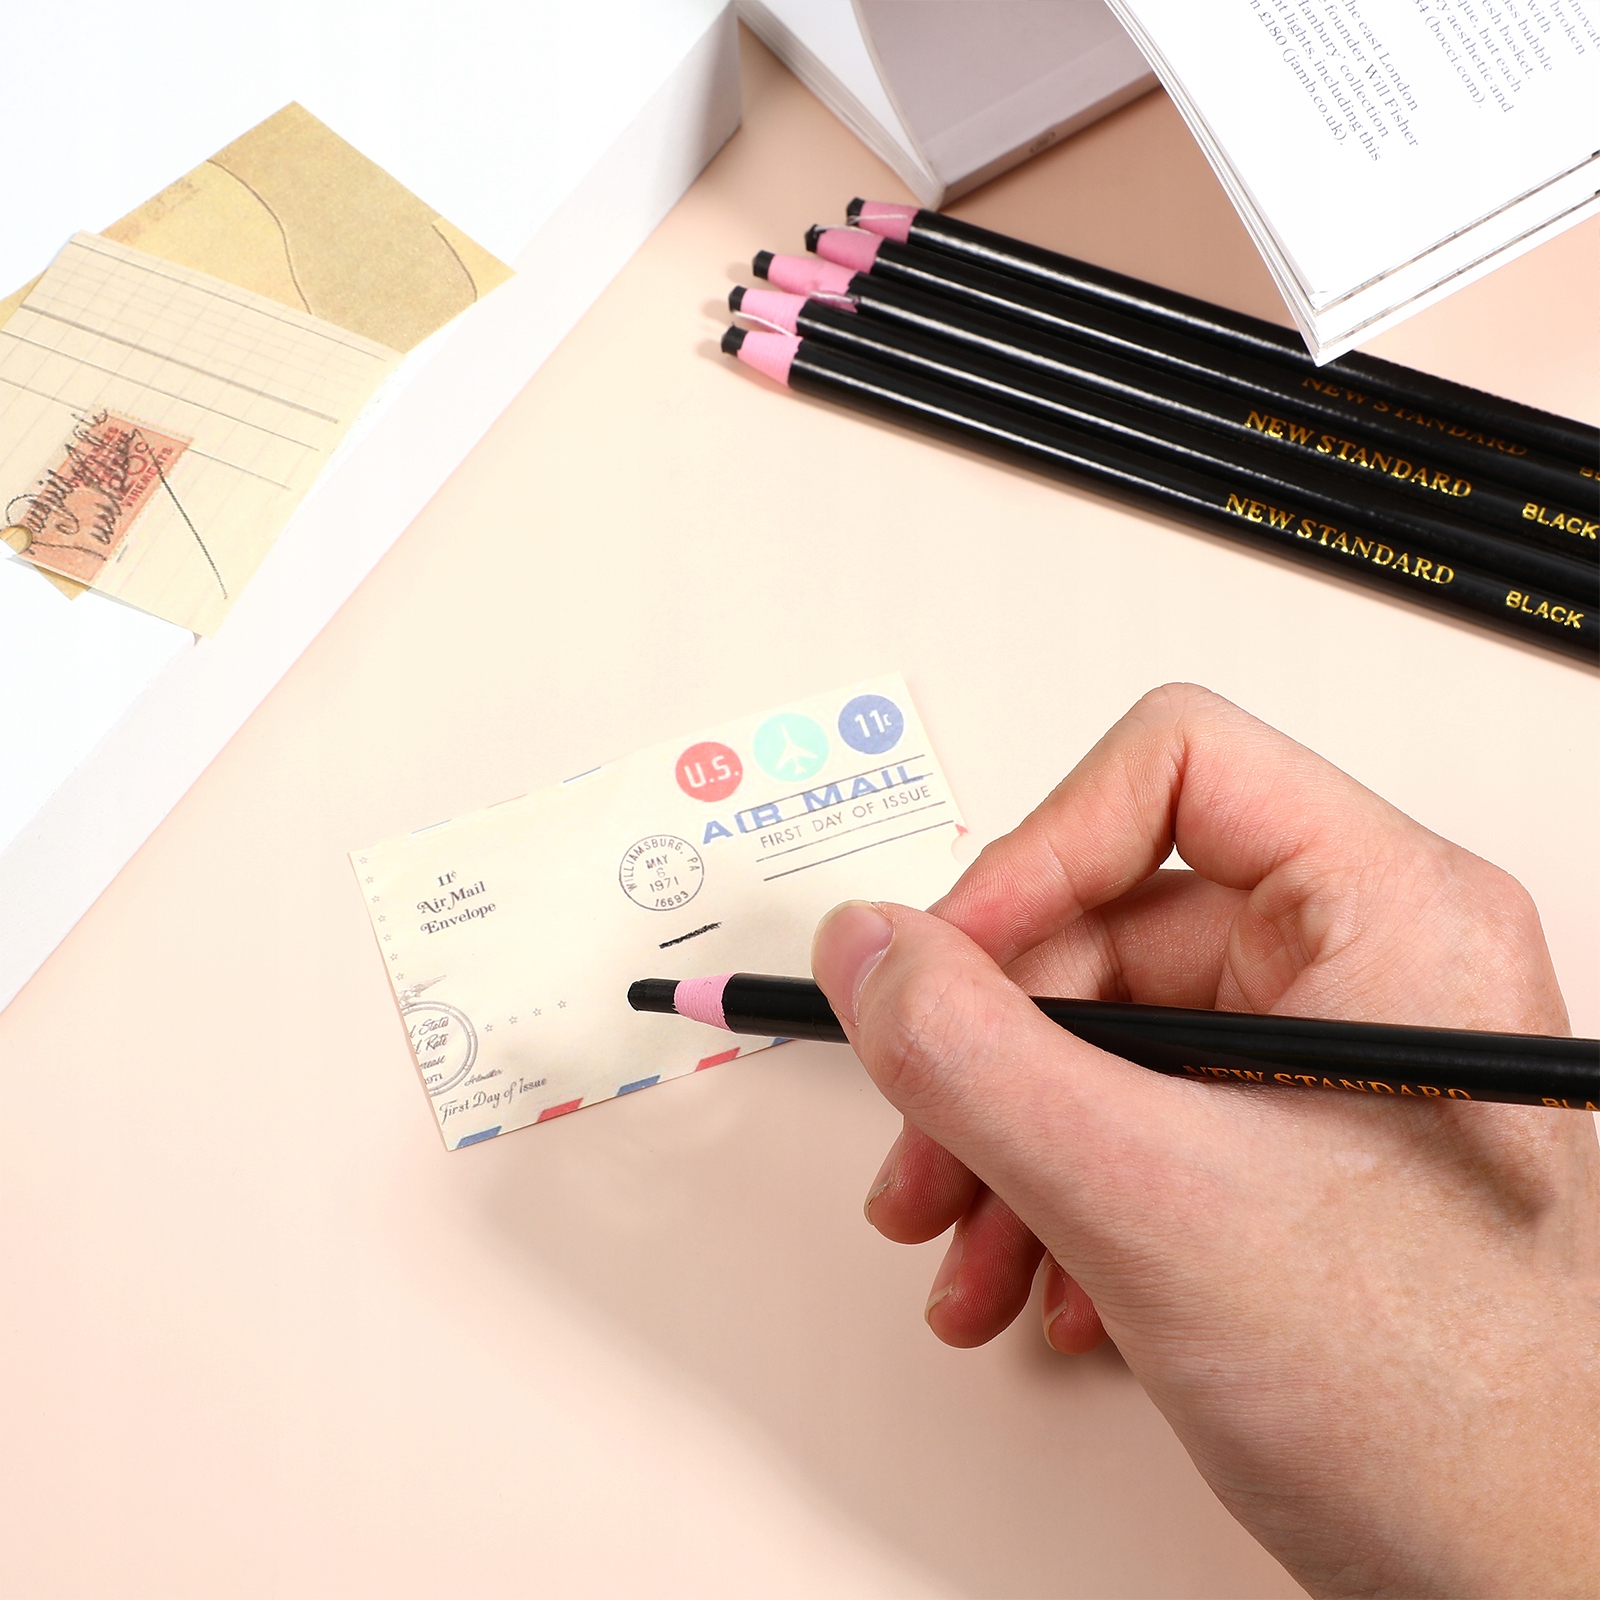 China Marker Pastelky White Grease Pencil za 160 Kč - Allegro